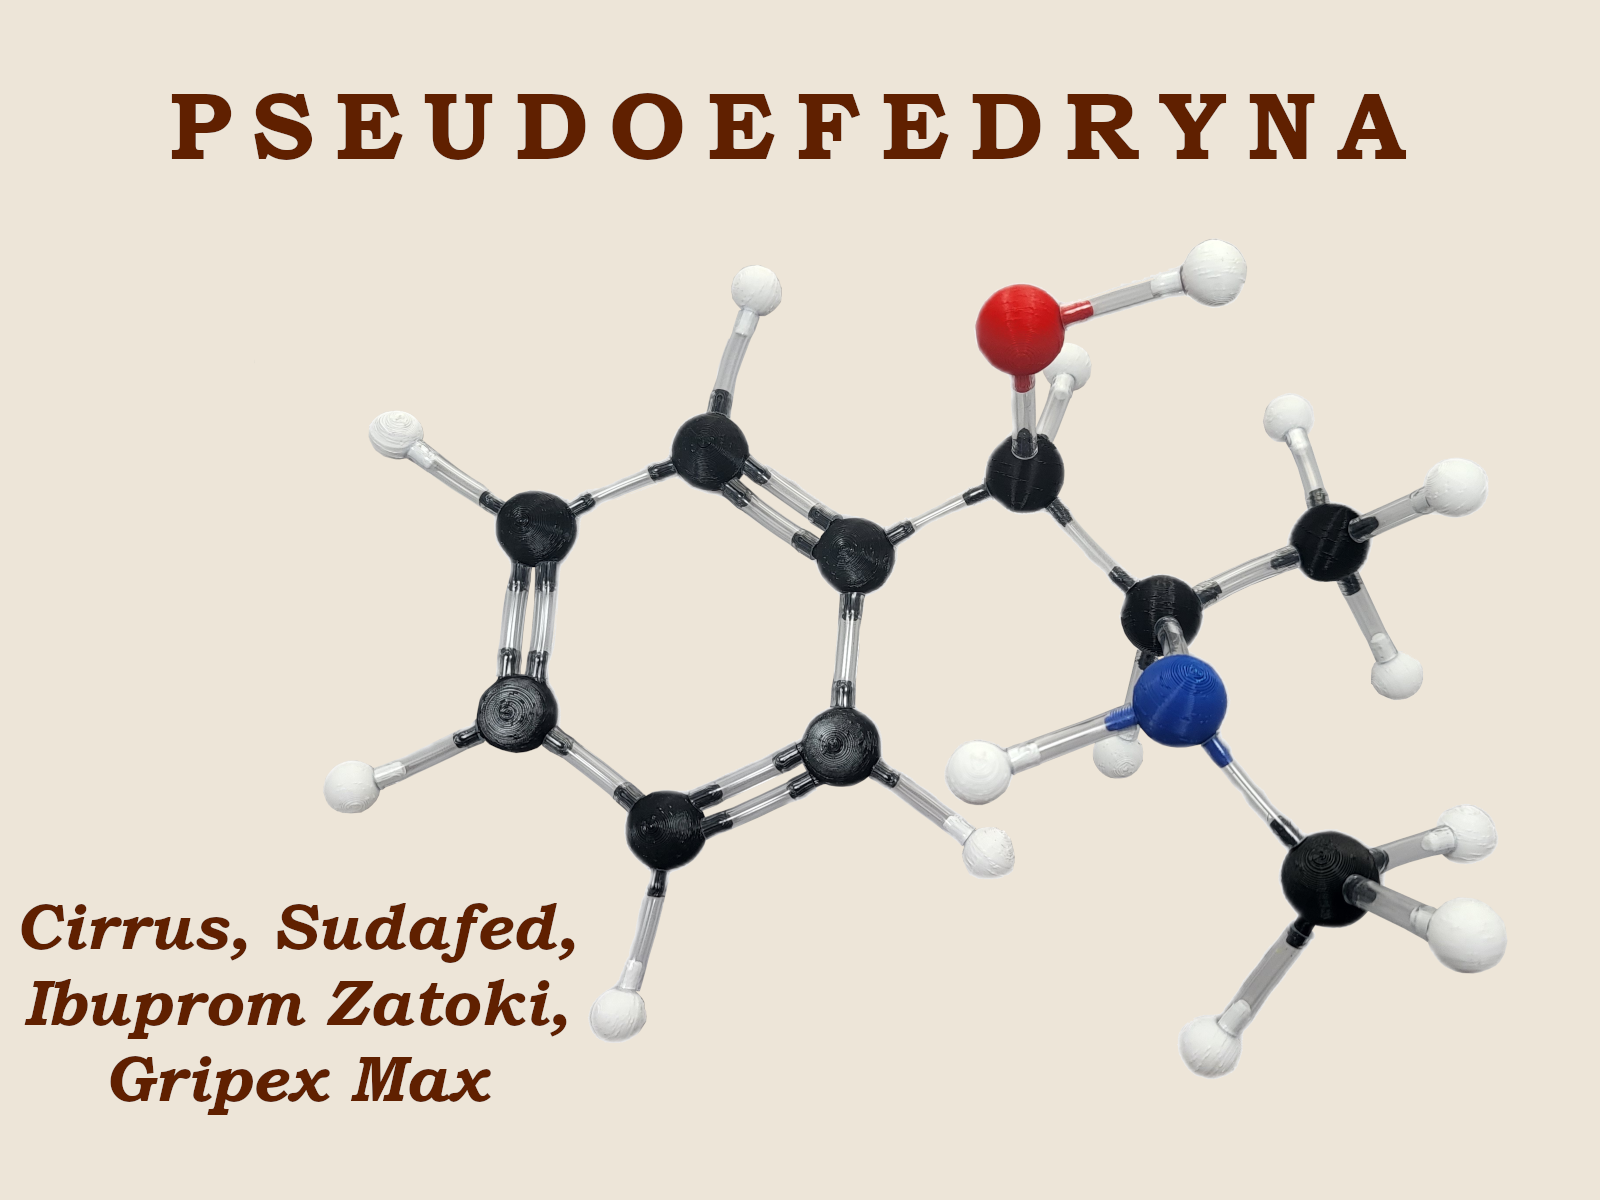 pseudoefedryna, cirrus, sudafed, ibuprom zatoki, gripex max